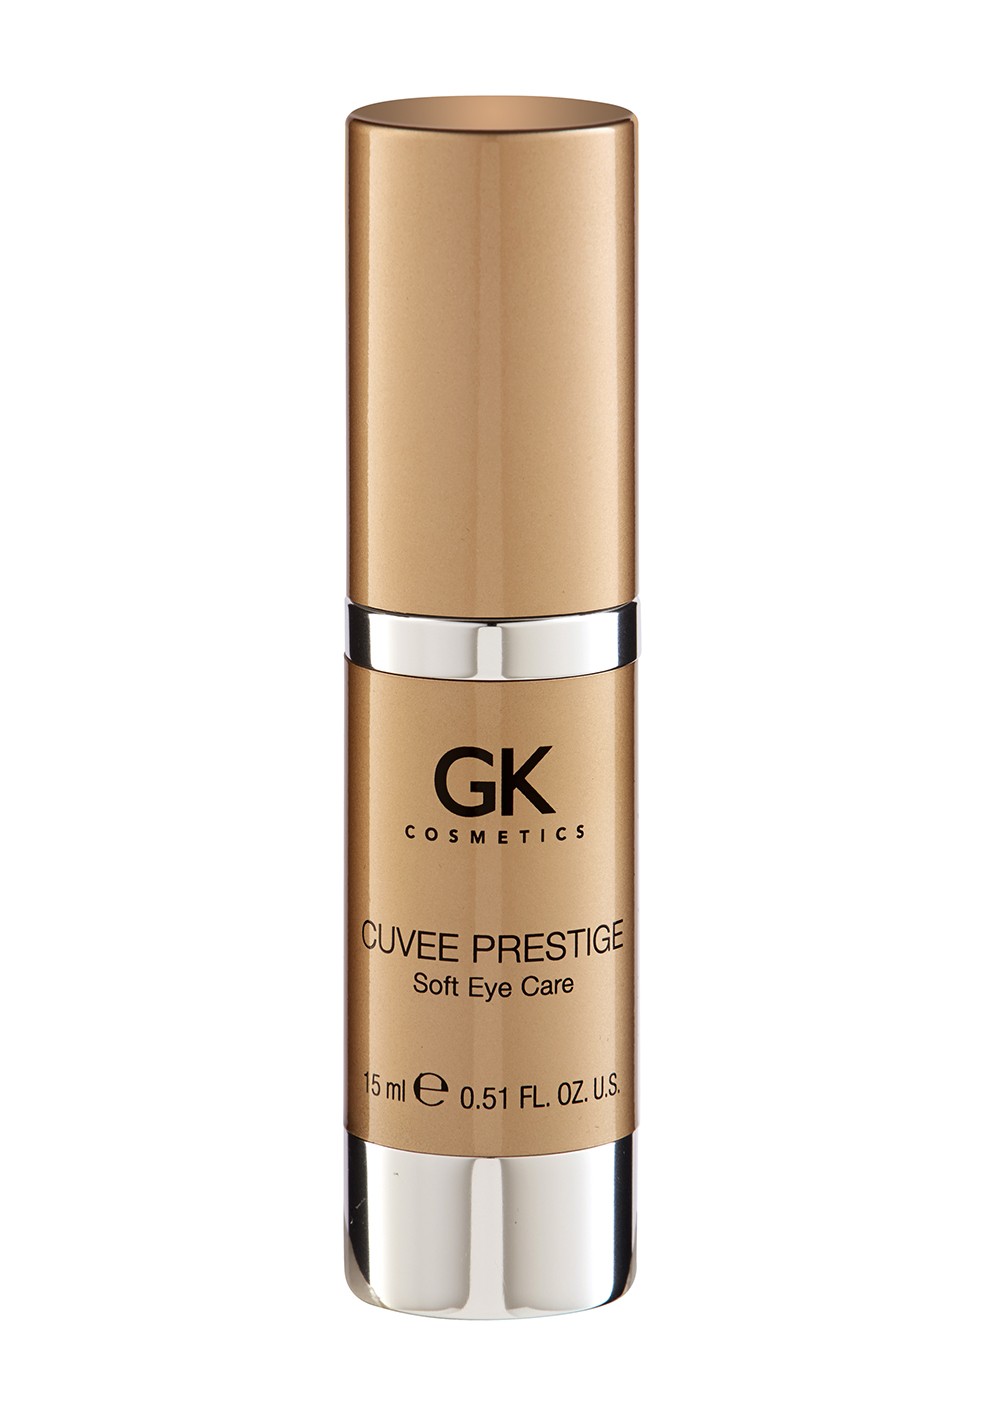 gk-cosmetics-cuvee-prestige-soft-eye-care-cream